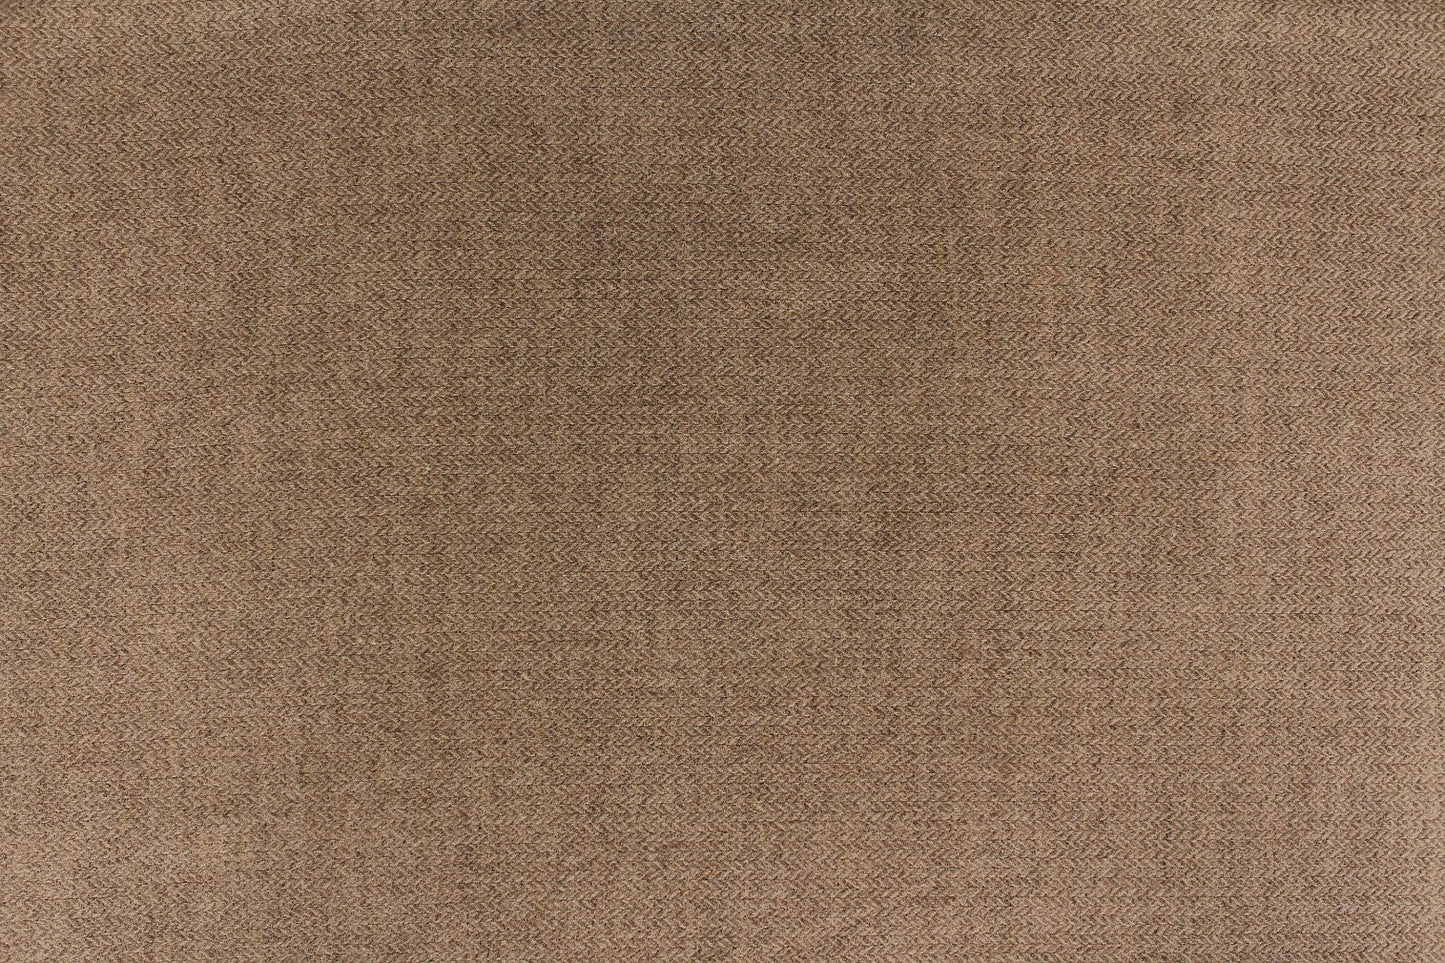 100% Wool Fabric - Winter Wheat Herringbone